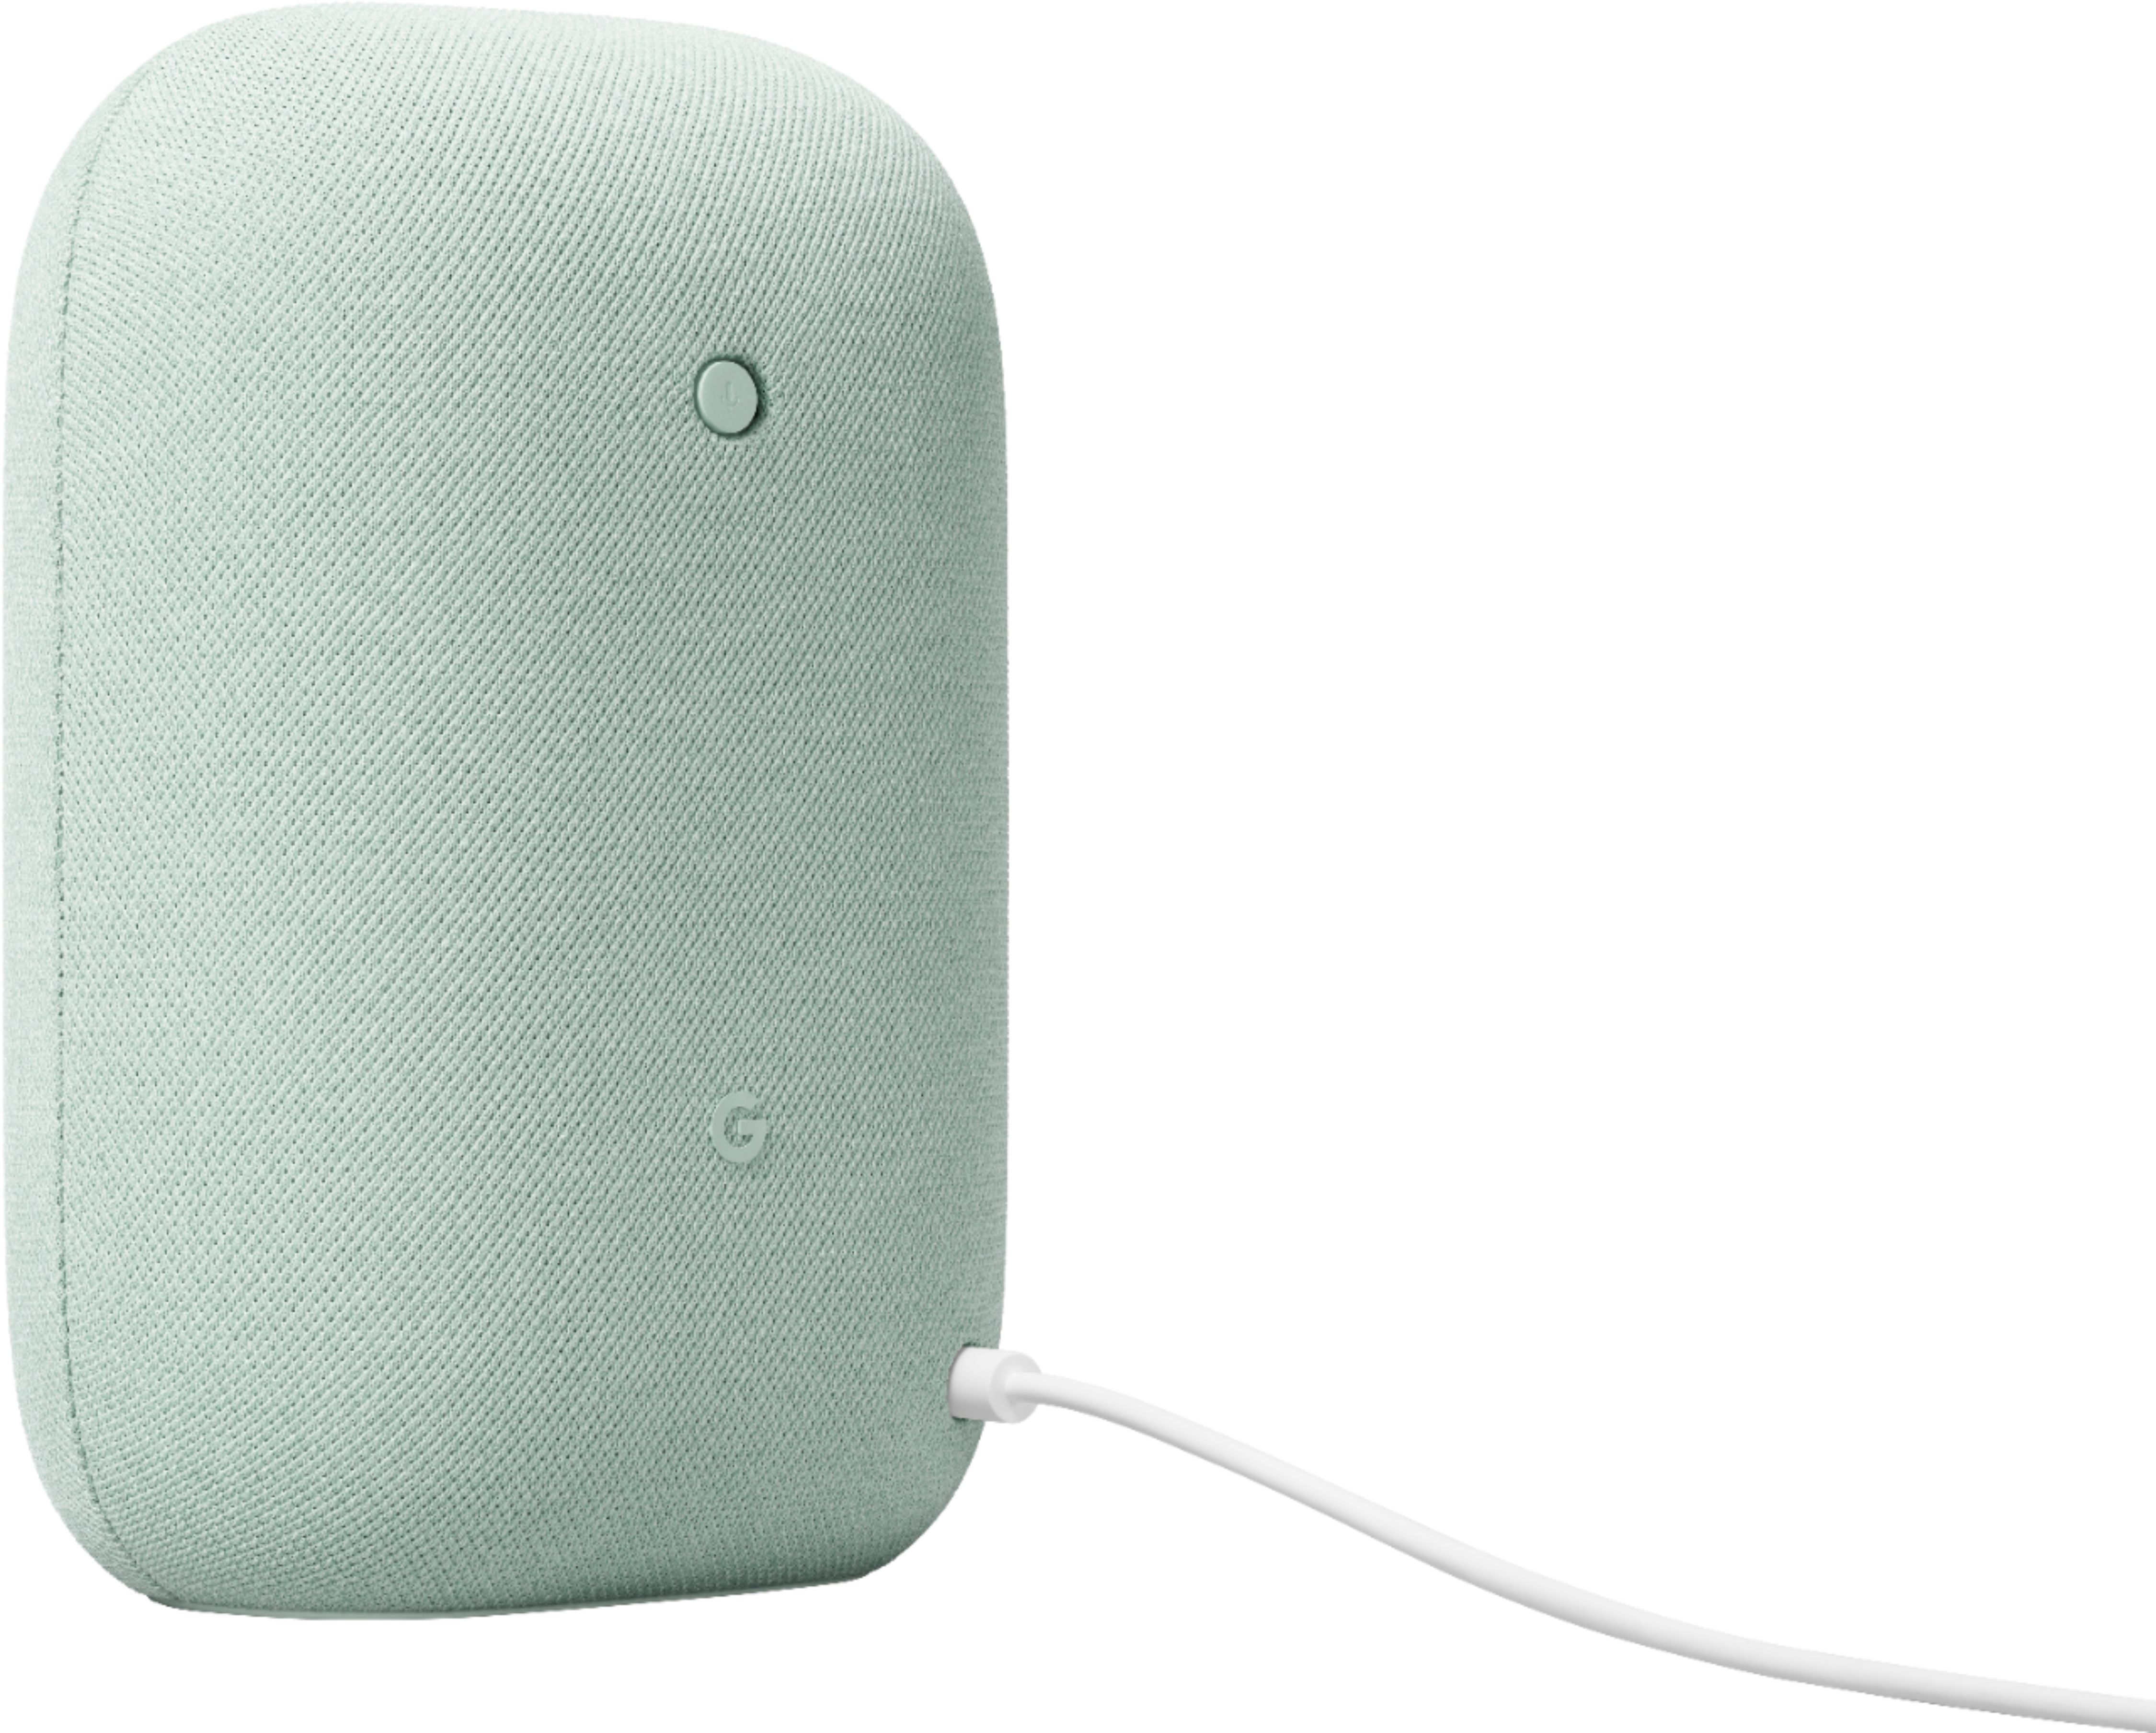 Google's Nest Mini smart speaker is now available for less than £20